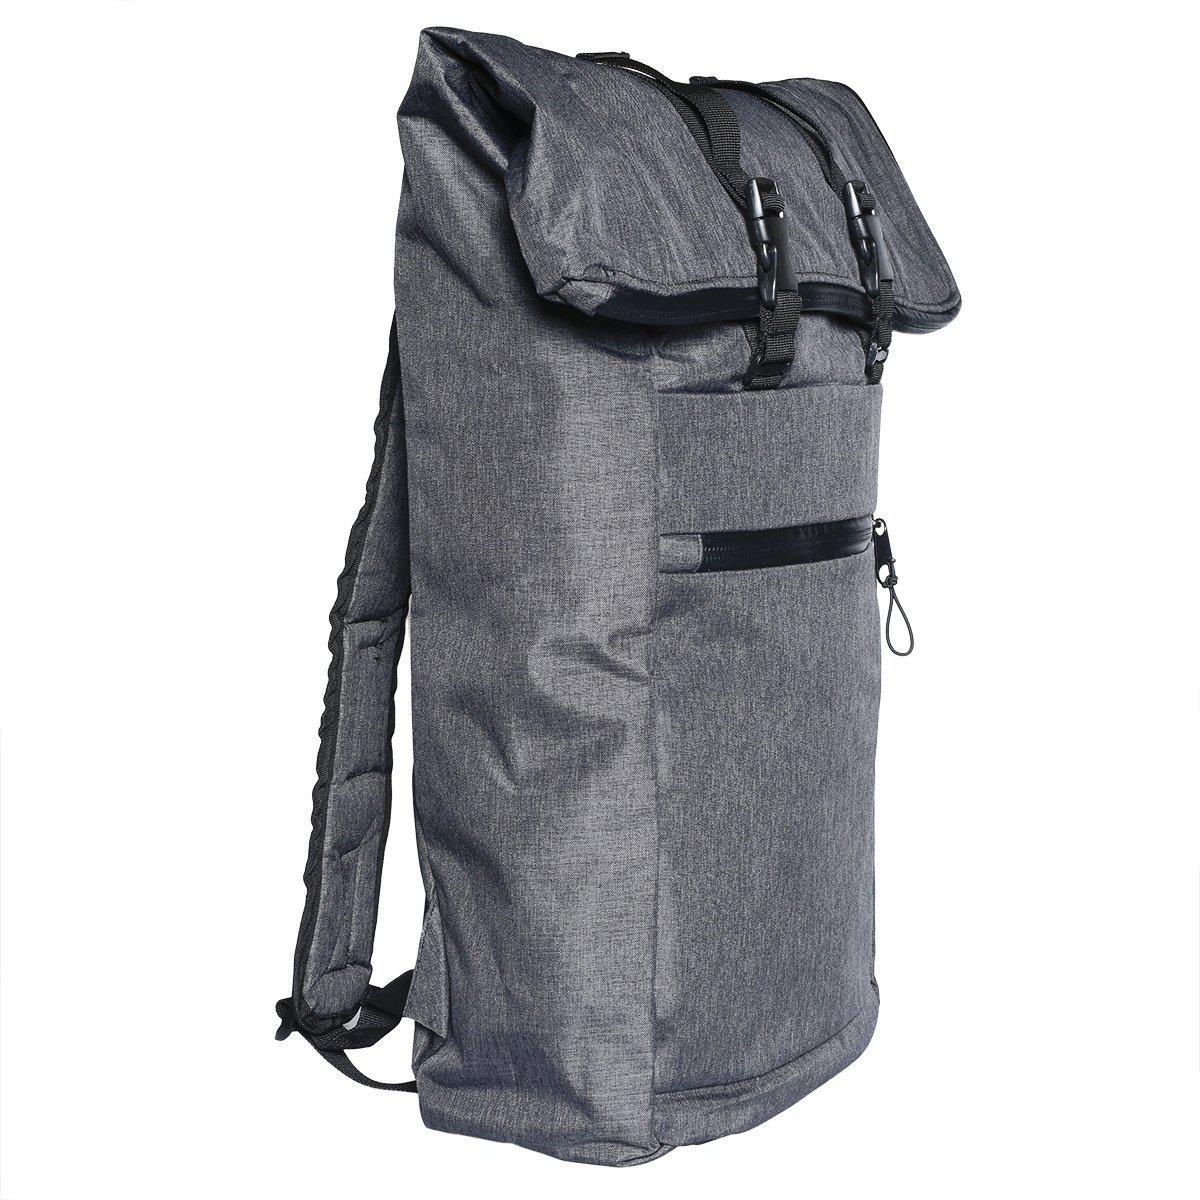 Odor Proof Backpack